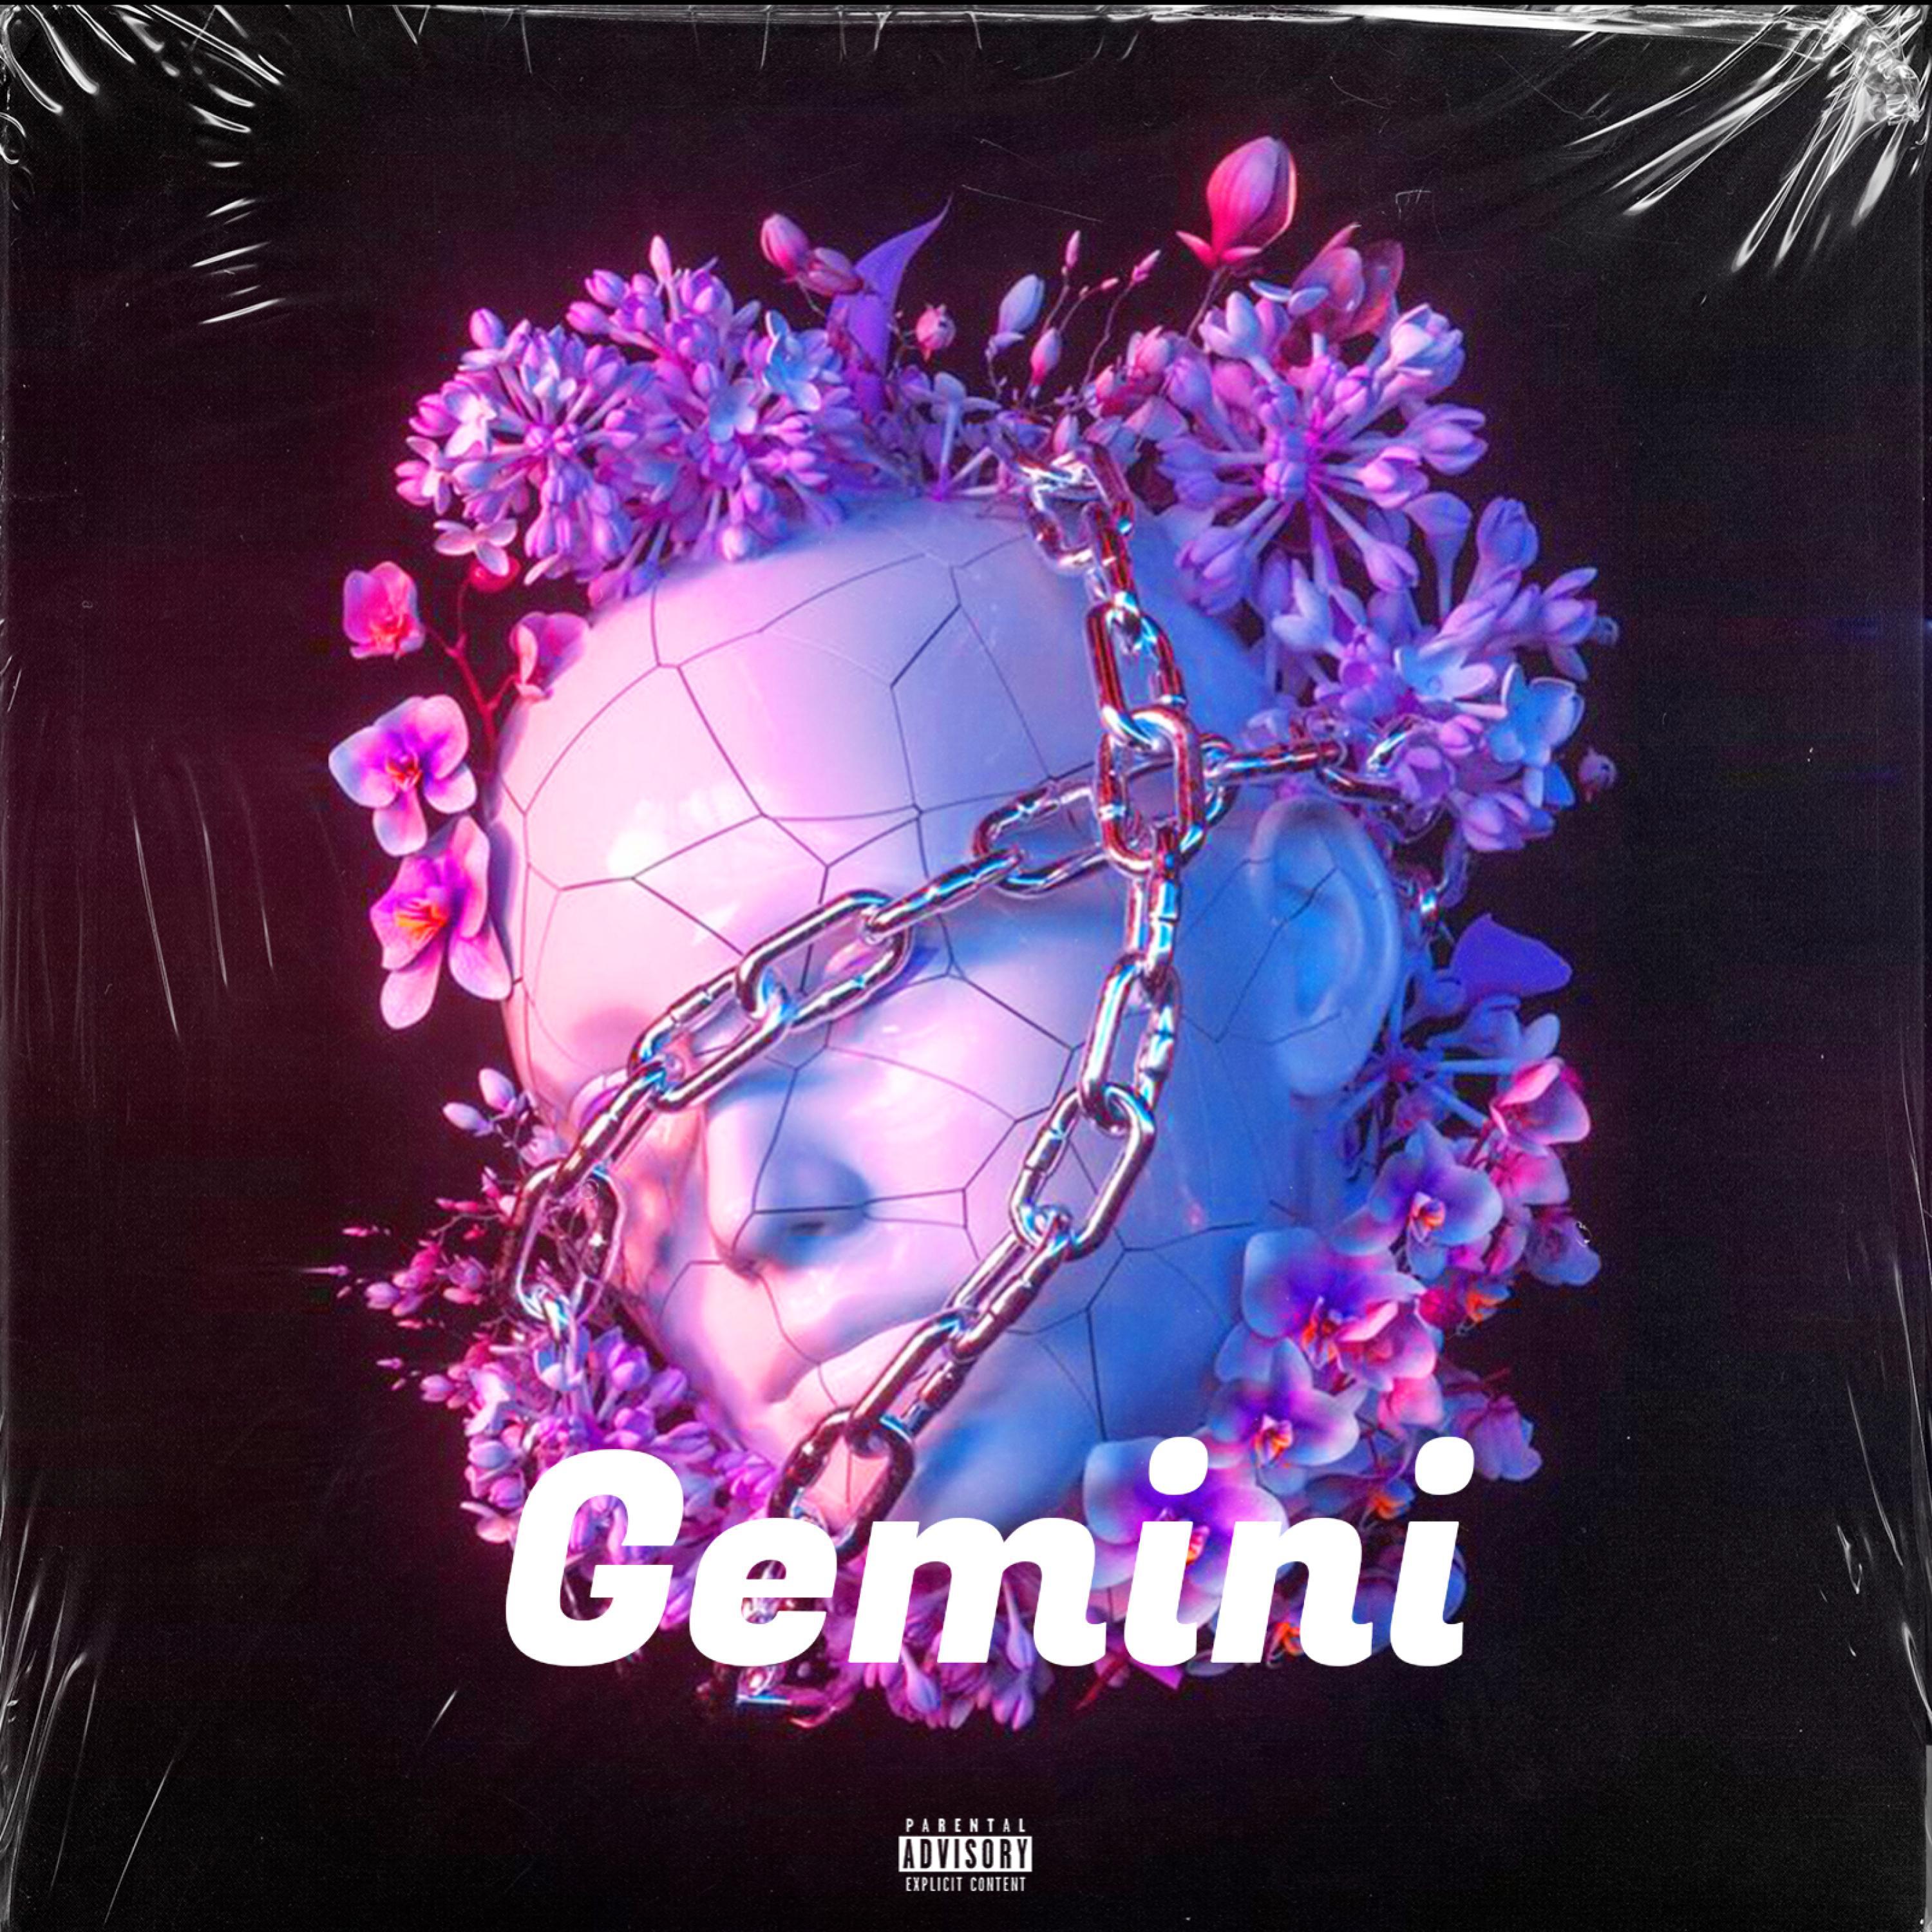 Rico Junkie - Gemini (feat. RIELL, Luci4 & Newkid)